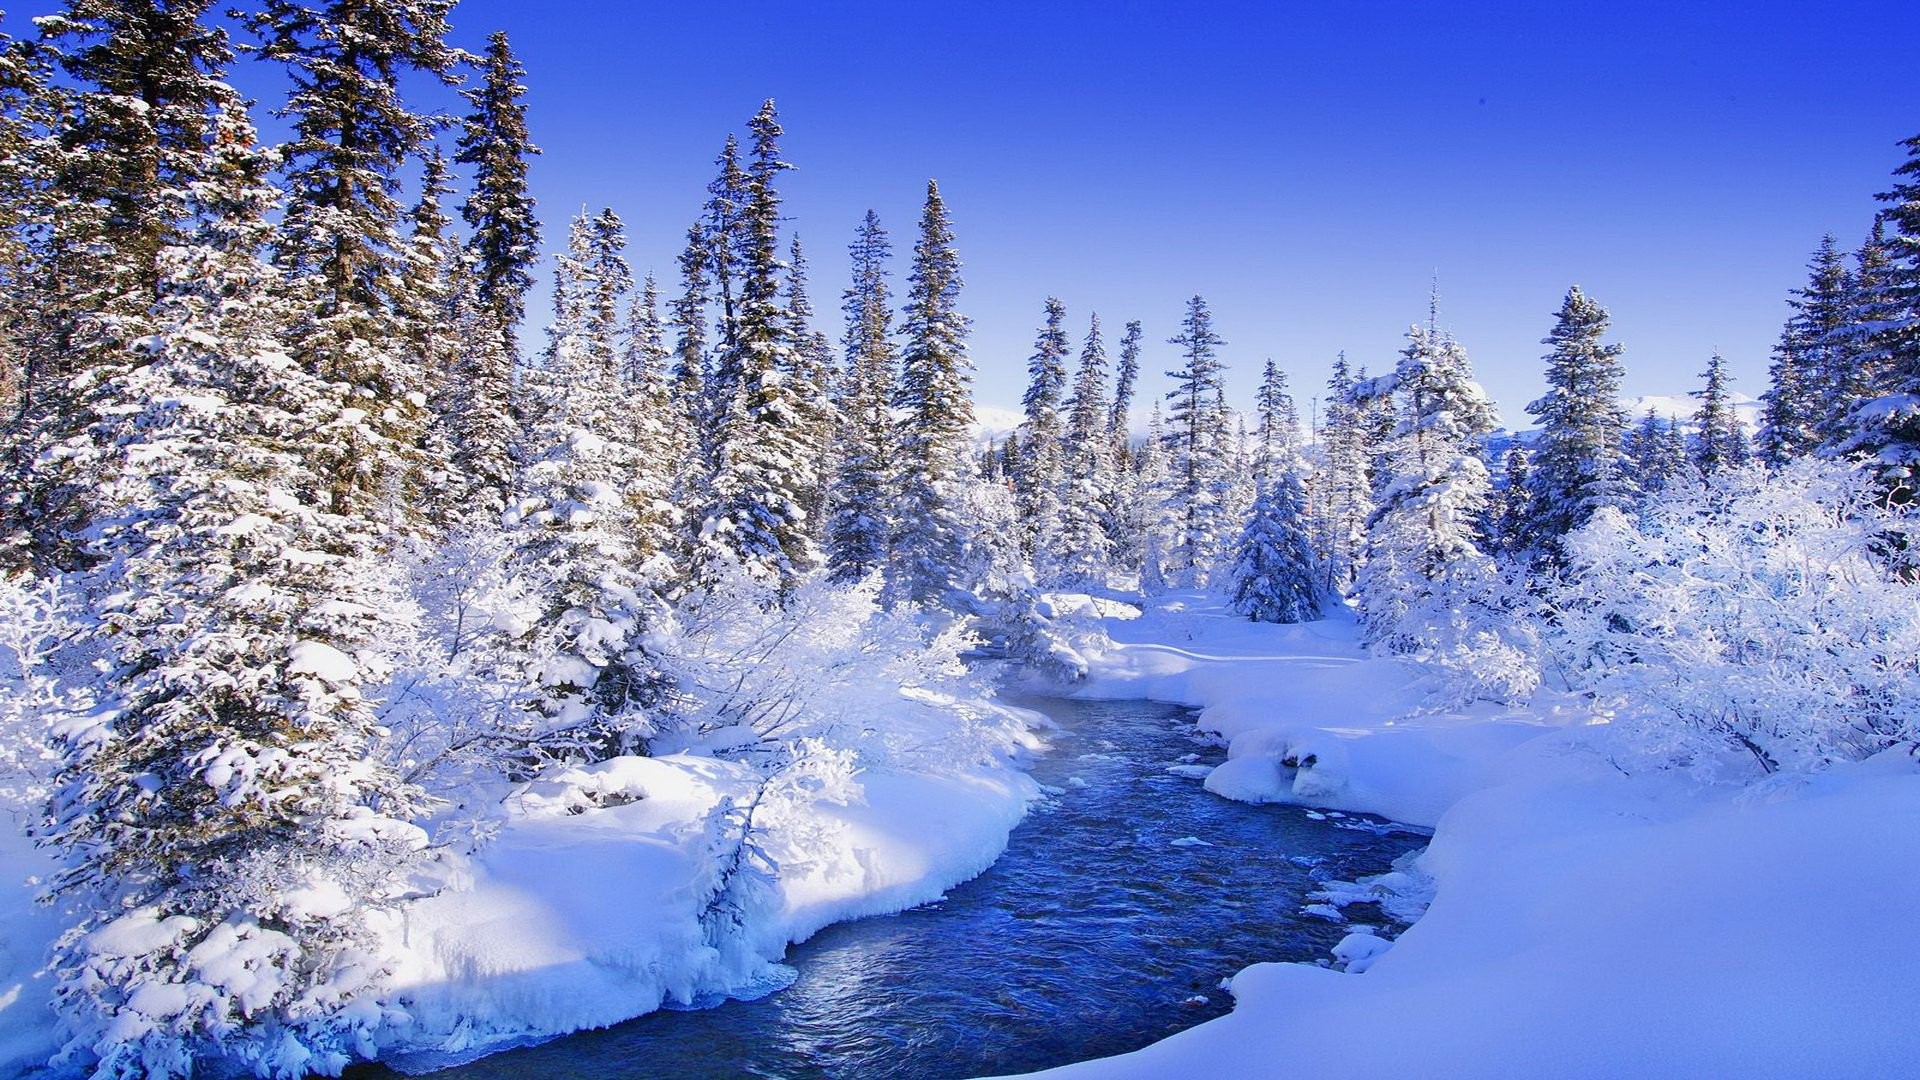 hola res fondo de pantalla gratis,invierno,nieve,naturaleza,paisaje natural,azul